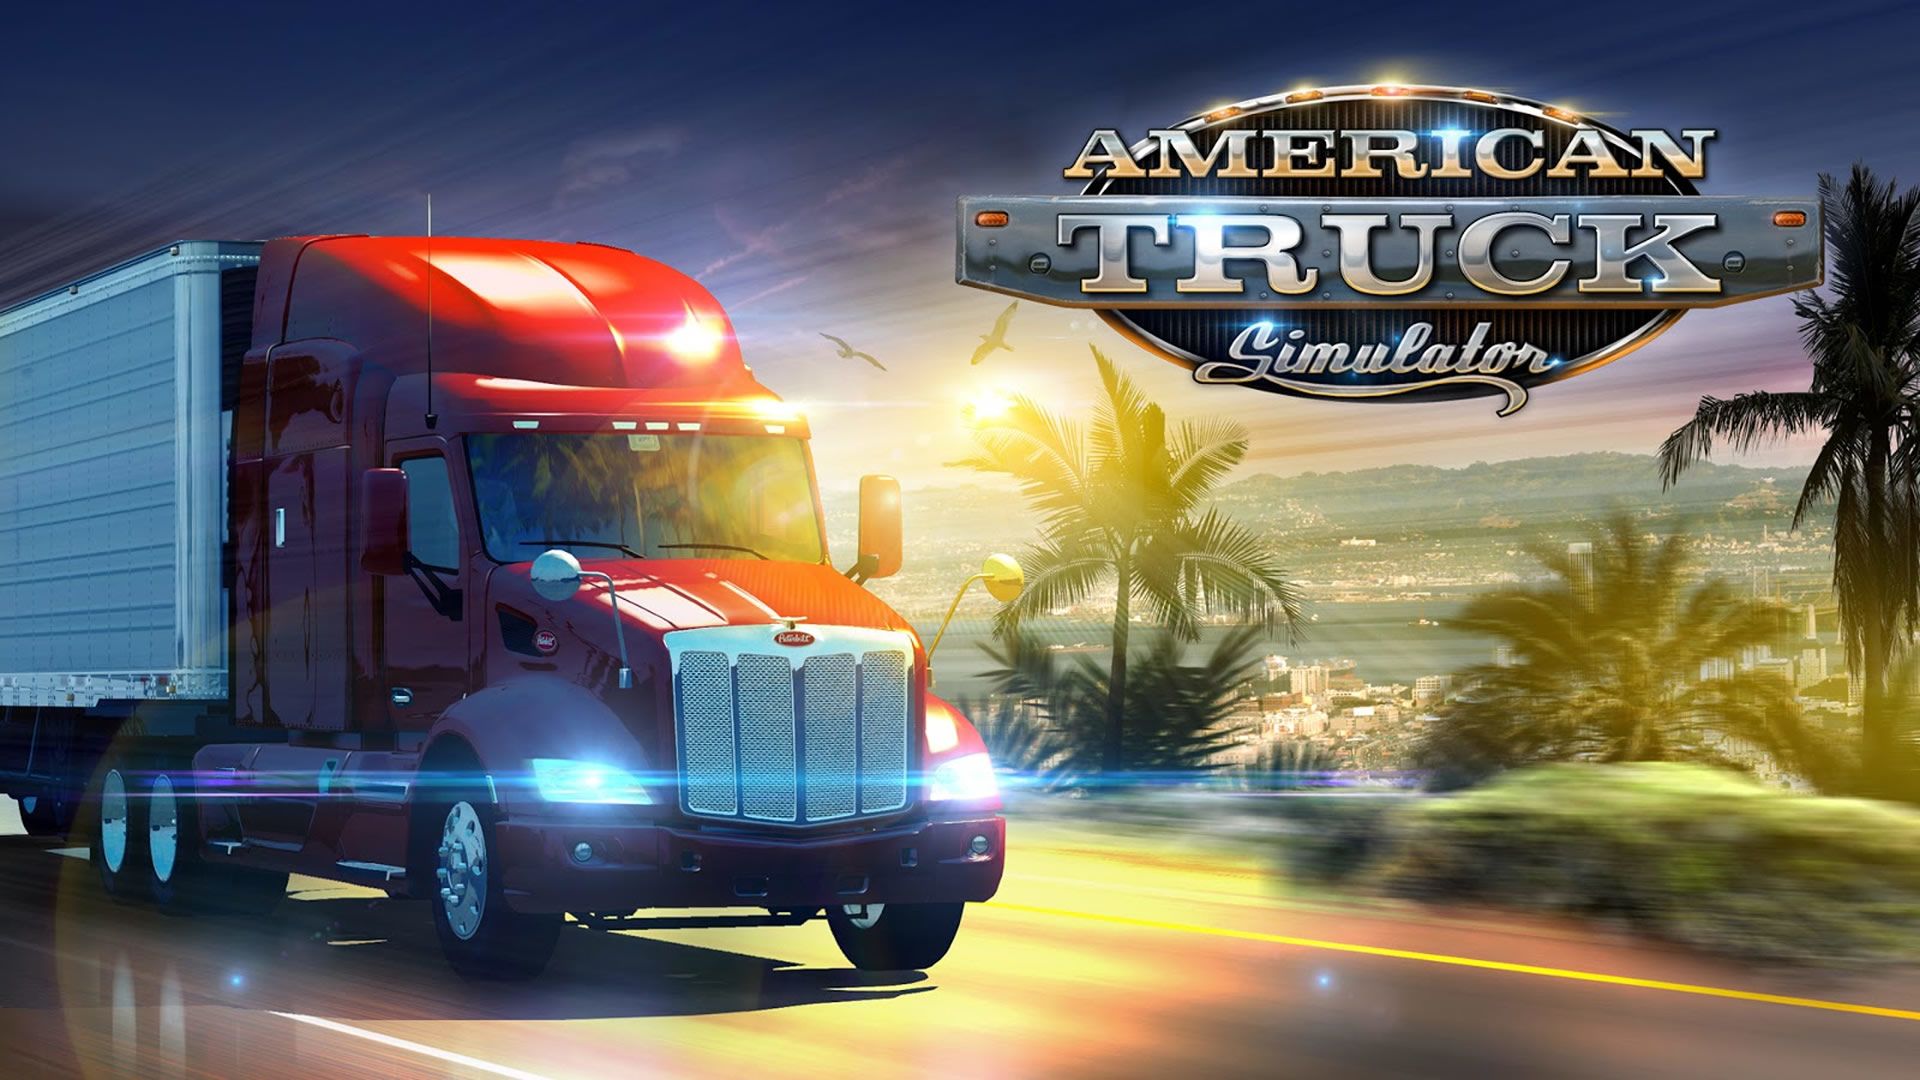 Video: American Truck Simulator – Montana trailer